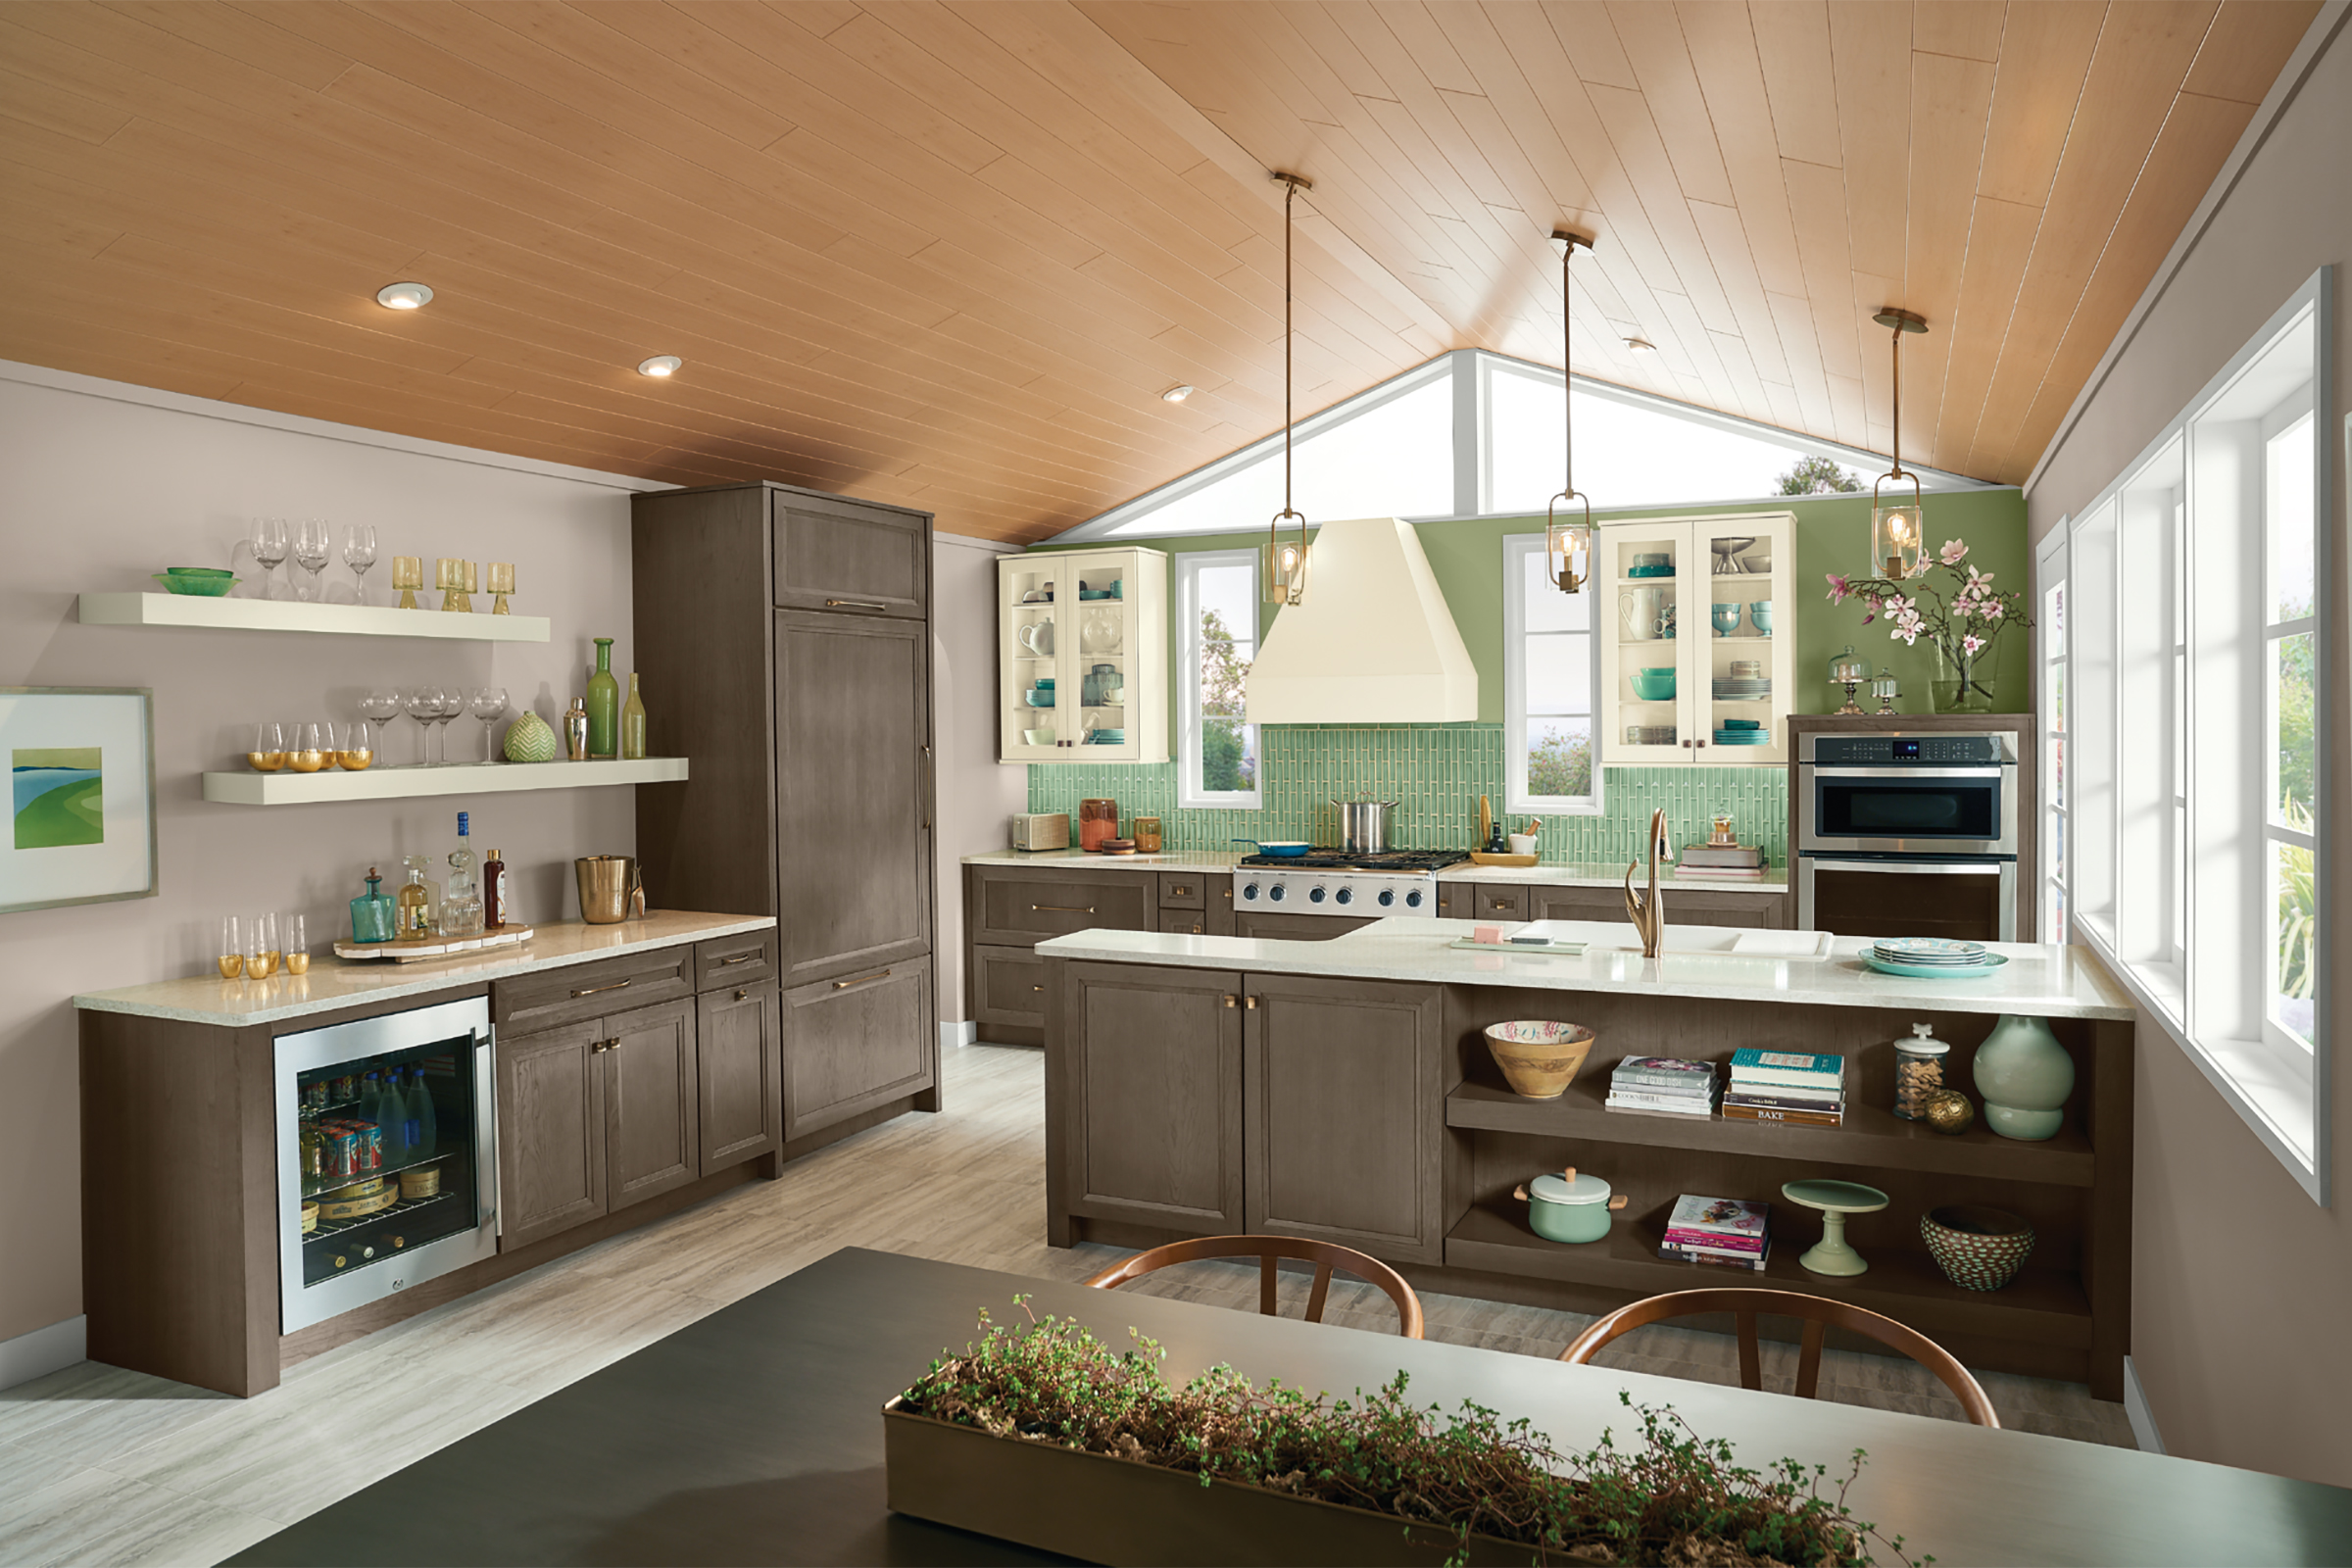 KraftMaid contemporary kitchen with sea green glass backsplash accent